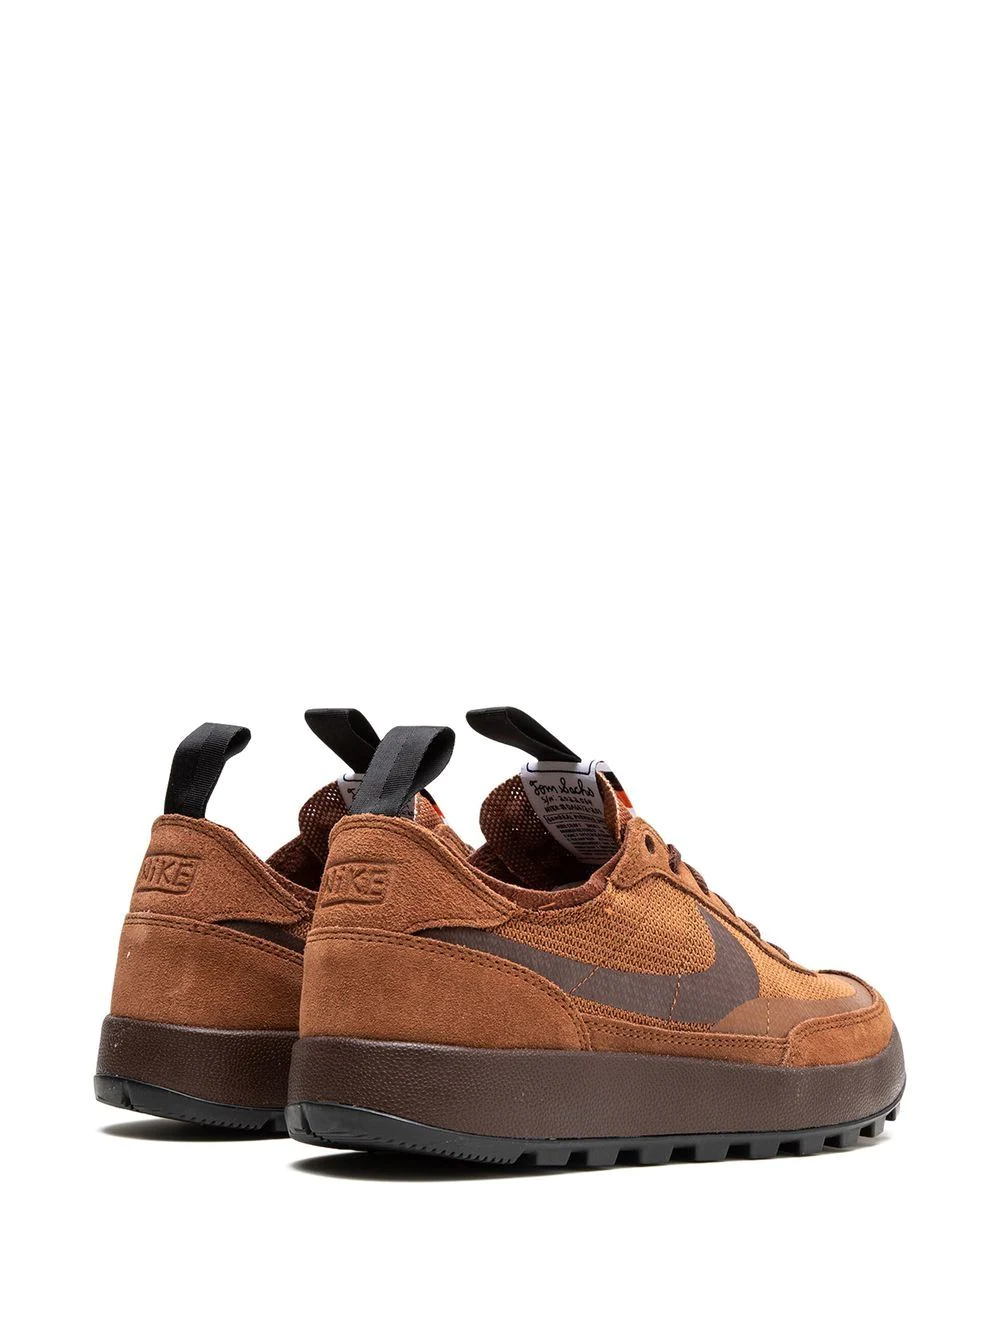 Nike Craft General Purpose Shoe Tom Sachs Field Brown